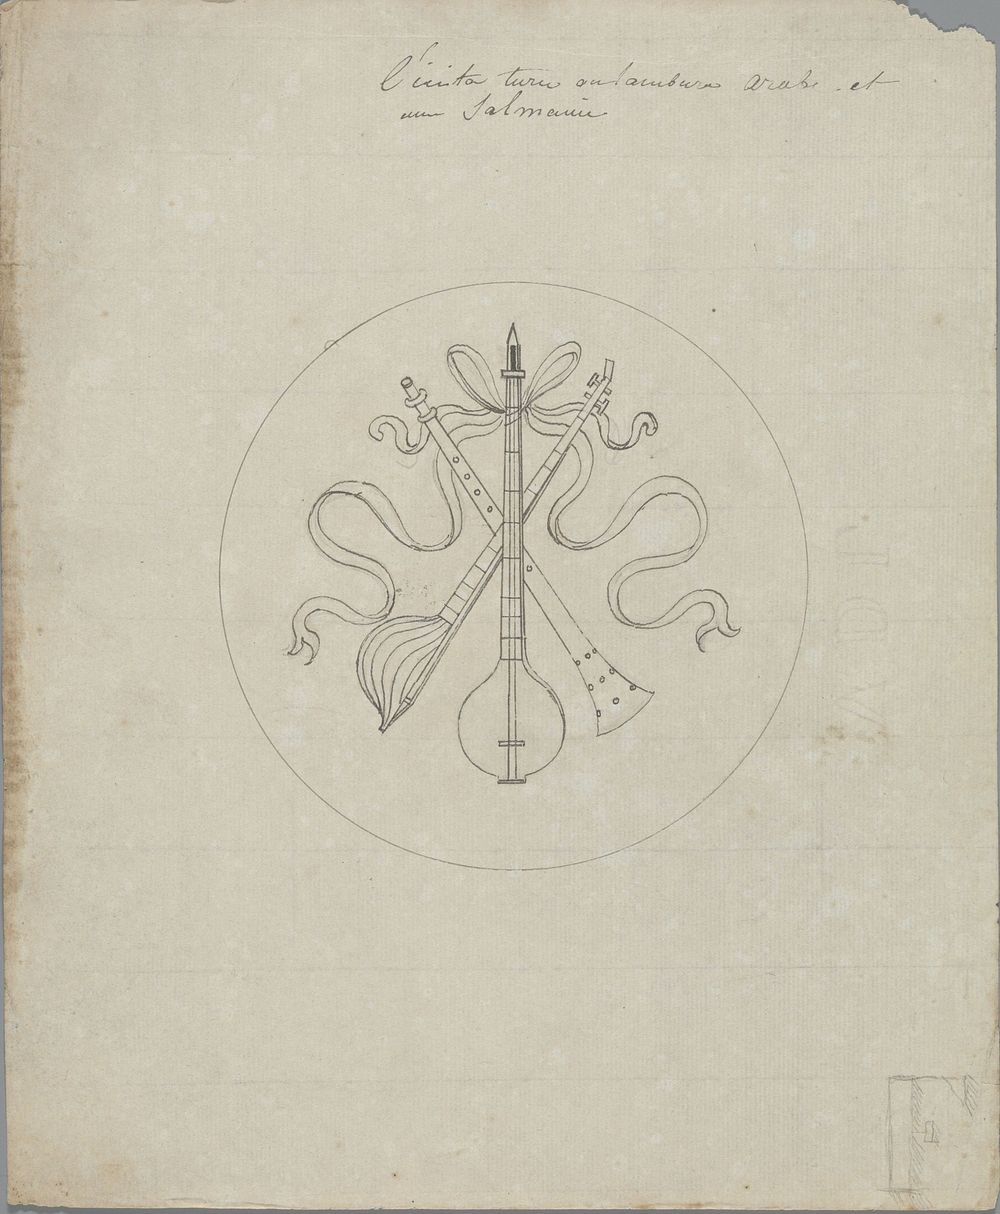 l’Icita [?] turc ou tamburin Arabe et une Salmanie (in or before 1828) by Pierre Félix van Doren